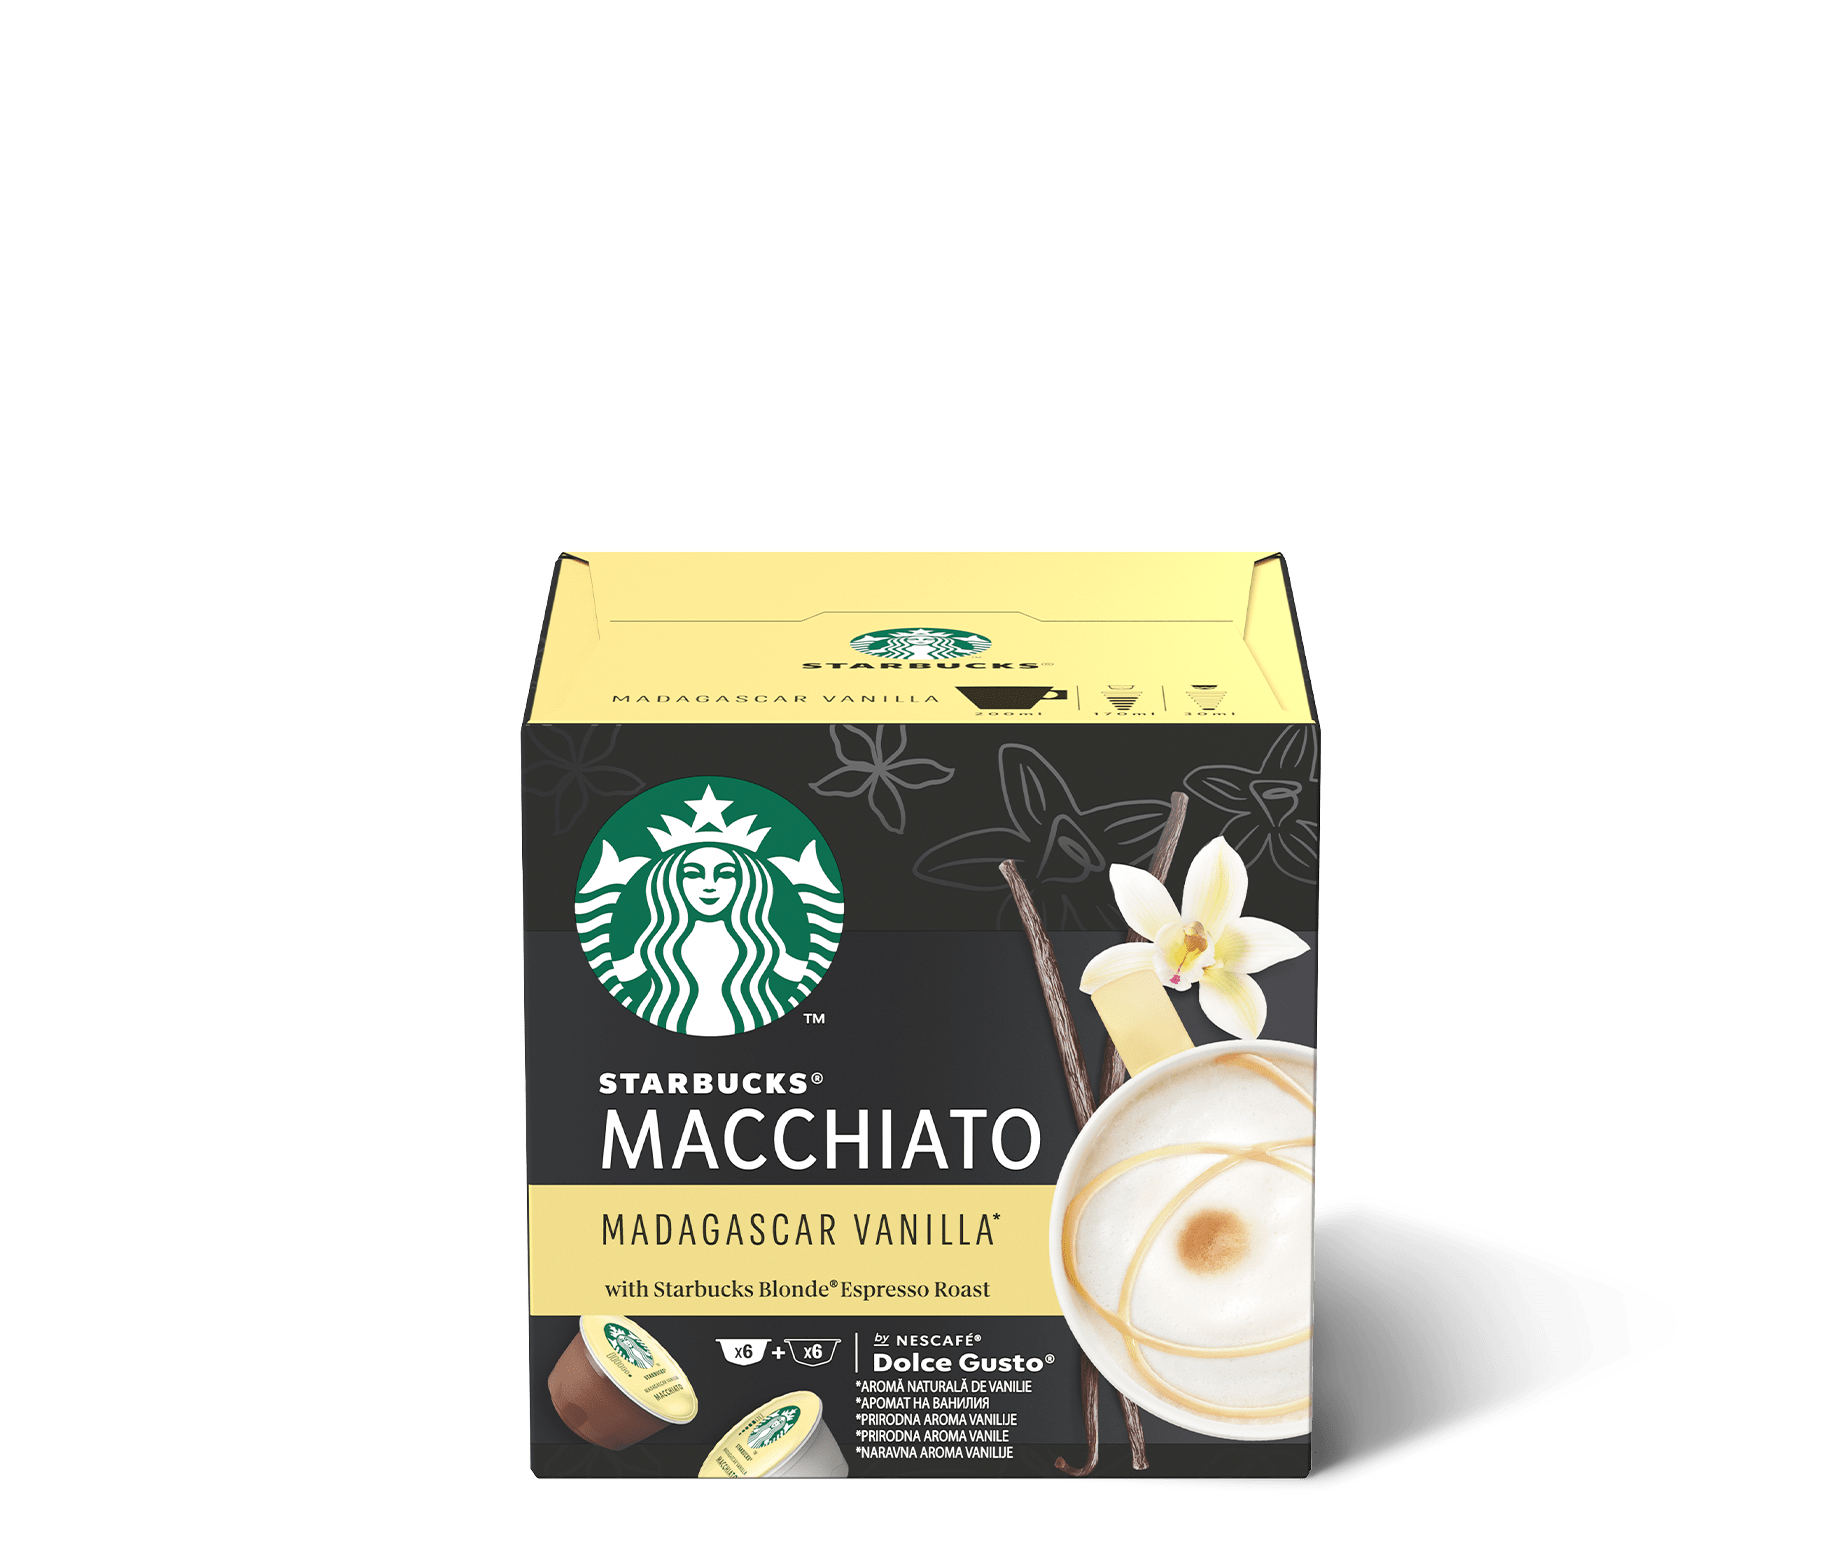 Starbucks Macchiato Madagascar Vanilla with Starbucks Blonde Espreso Roast by NESCAFÉ Dolce Gusto Kapsule za kafu